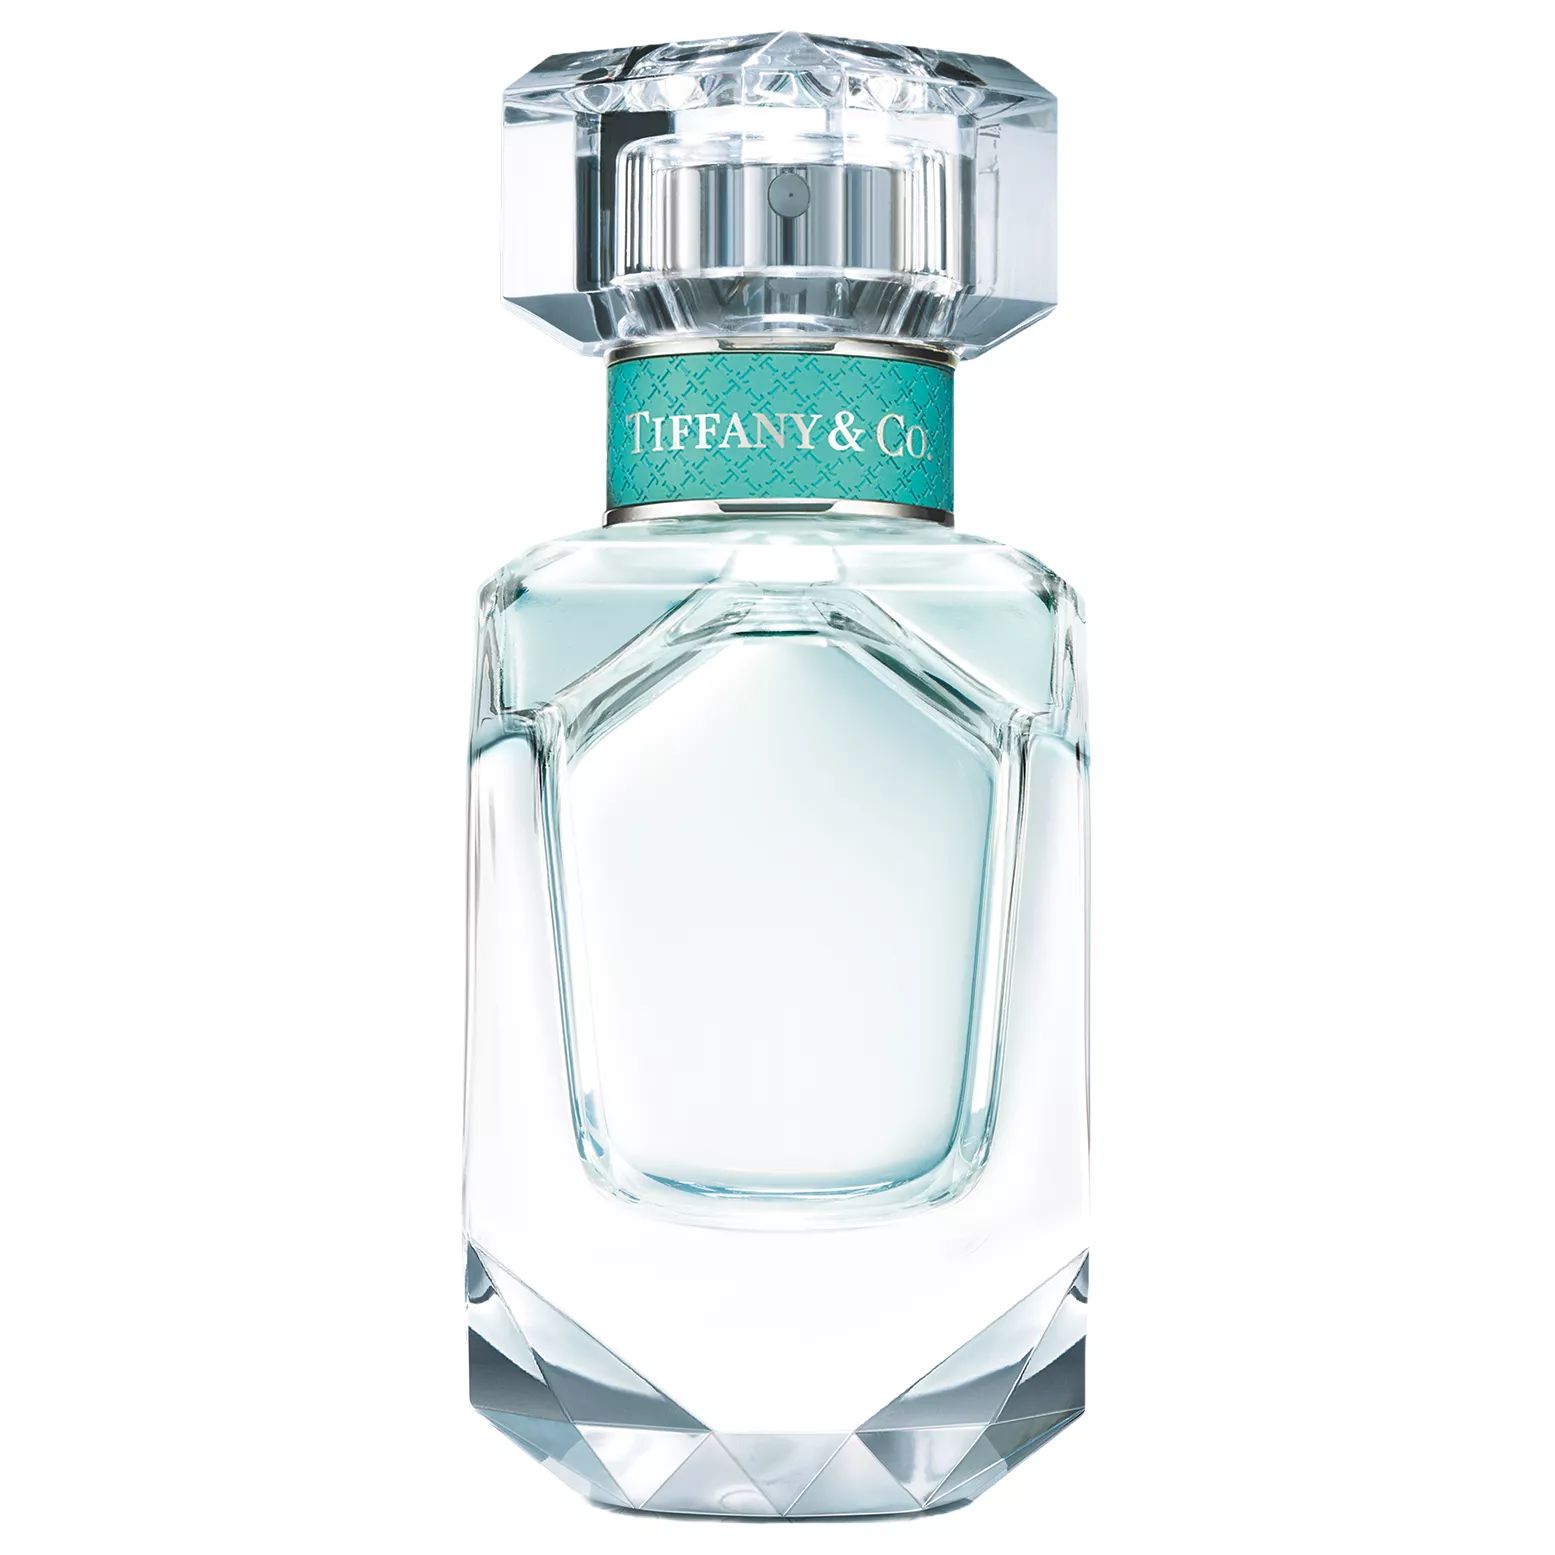 Tiffany & Co Eau de Parfum, 30ml | John Lewis (UK)